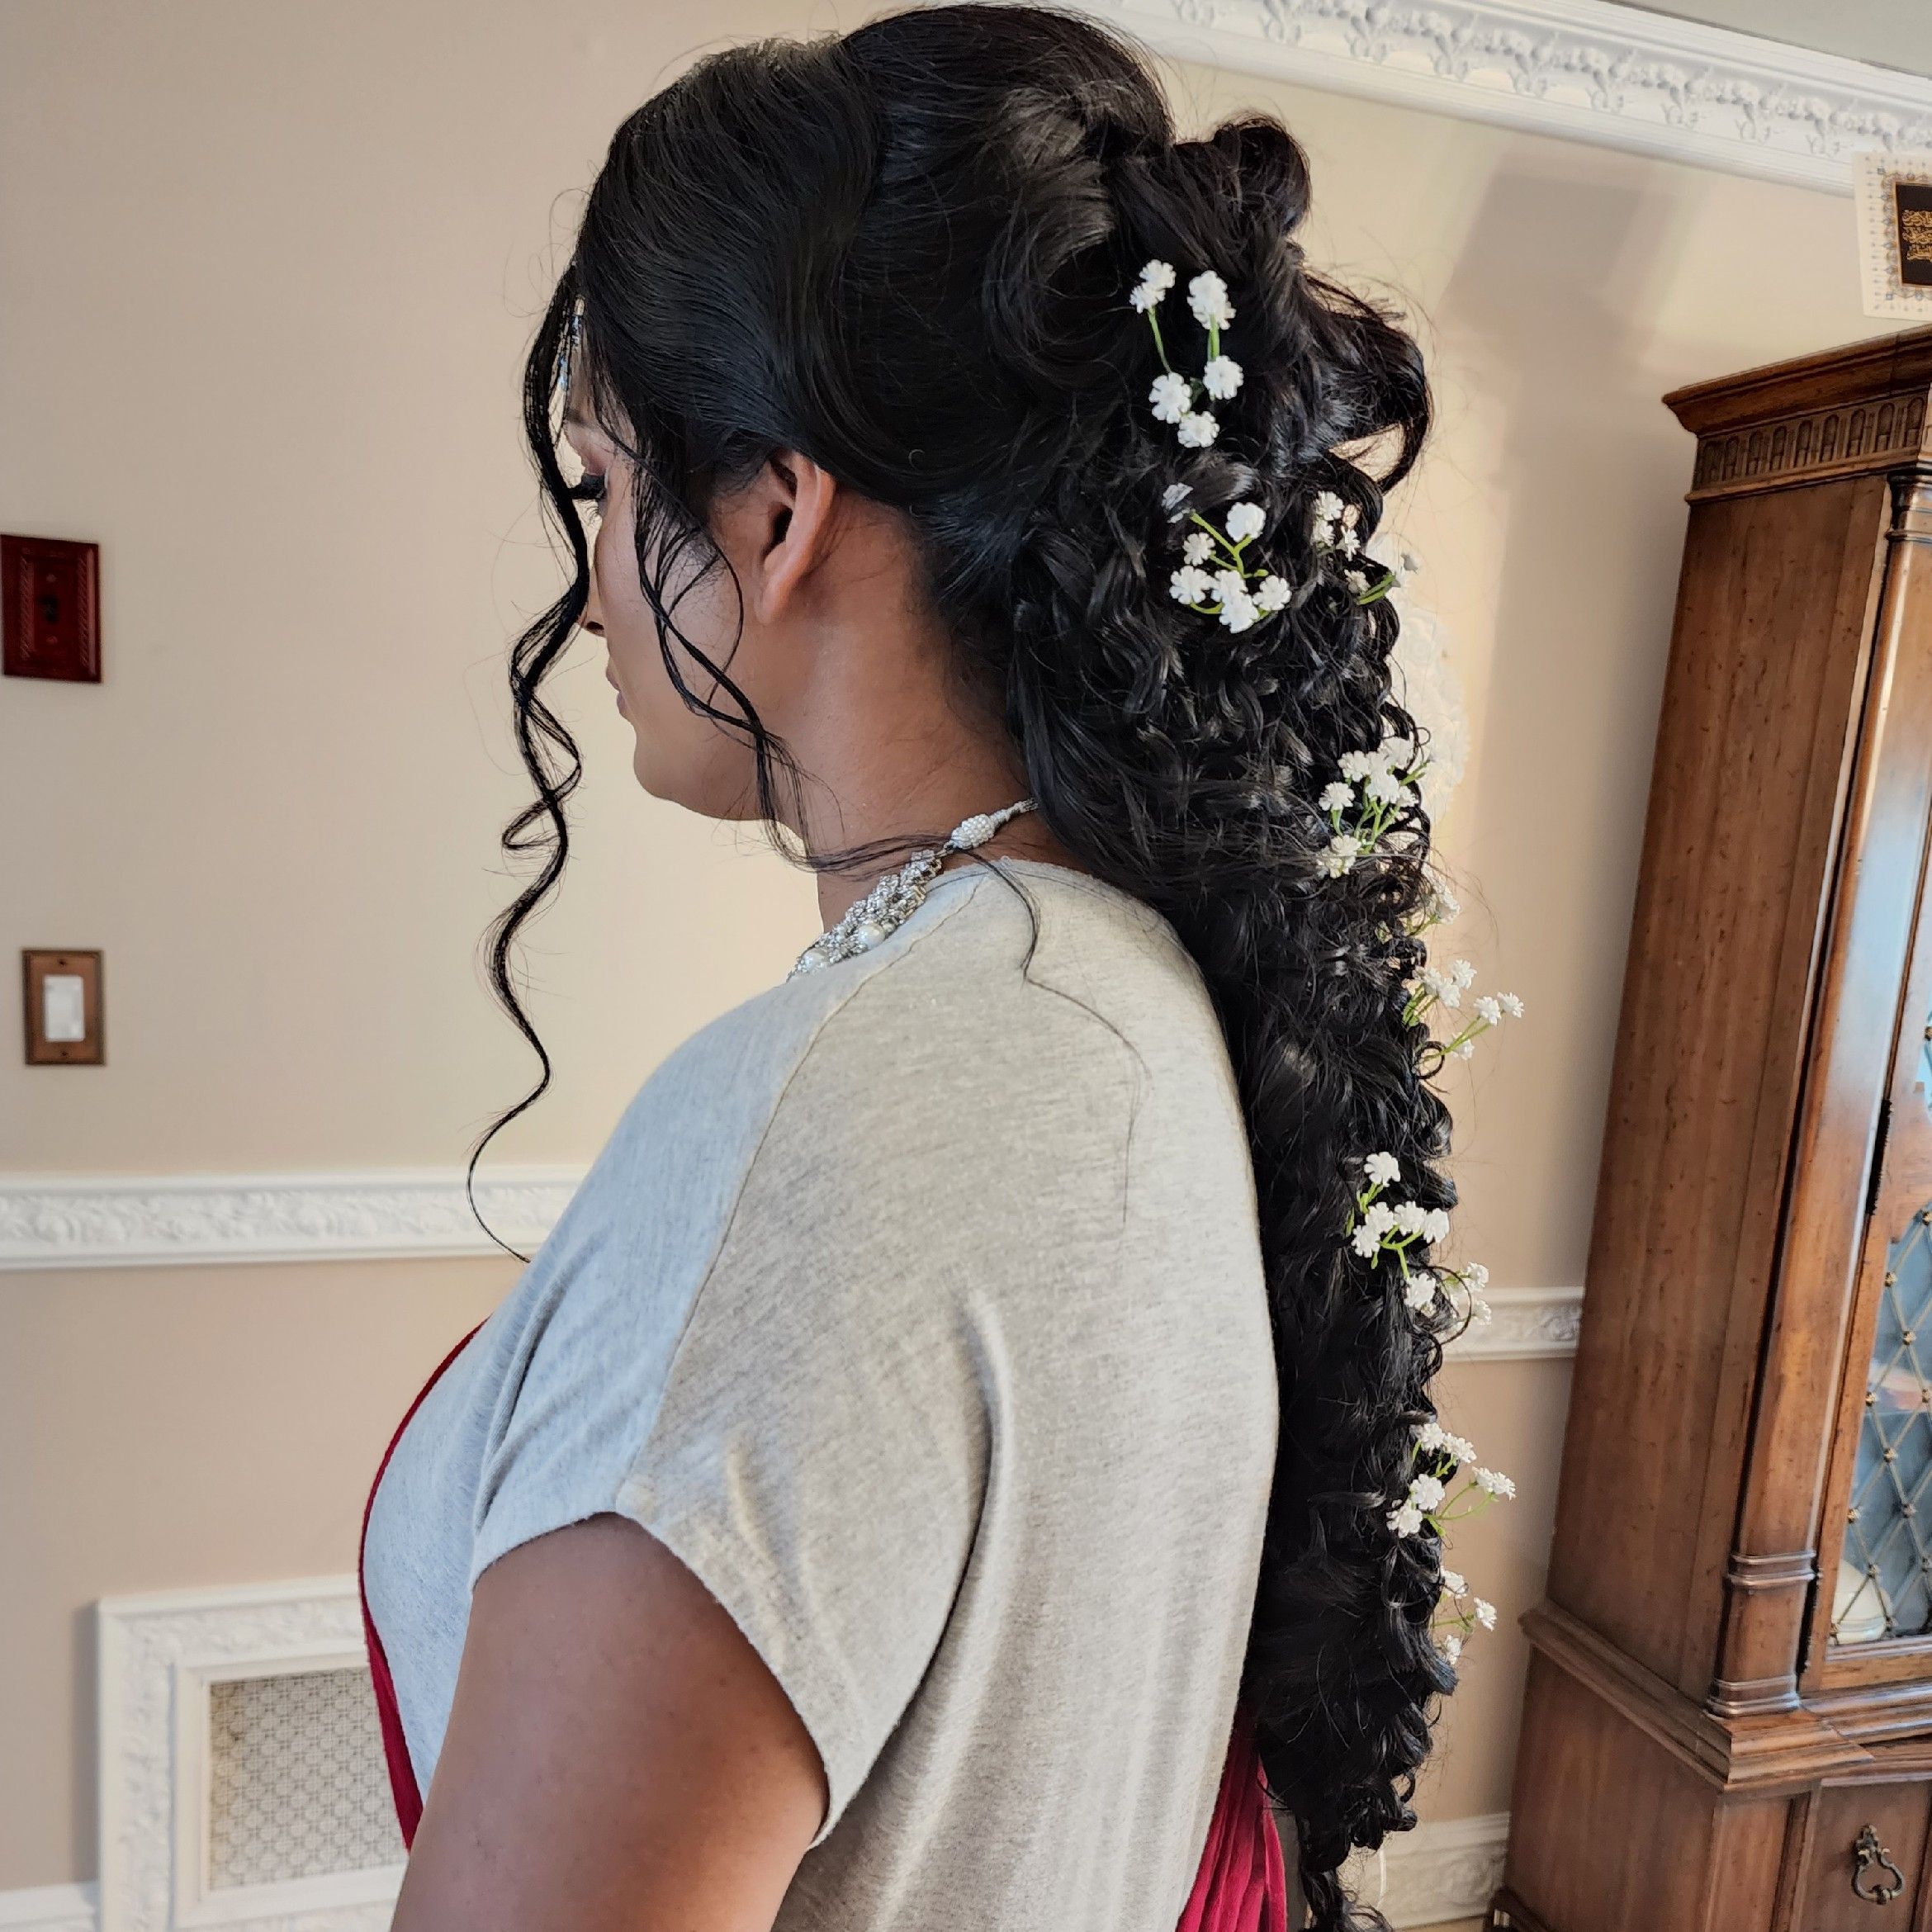 Indian Bridal Hair, Makeup And Dressing portfolio